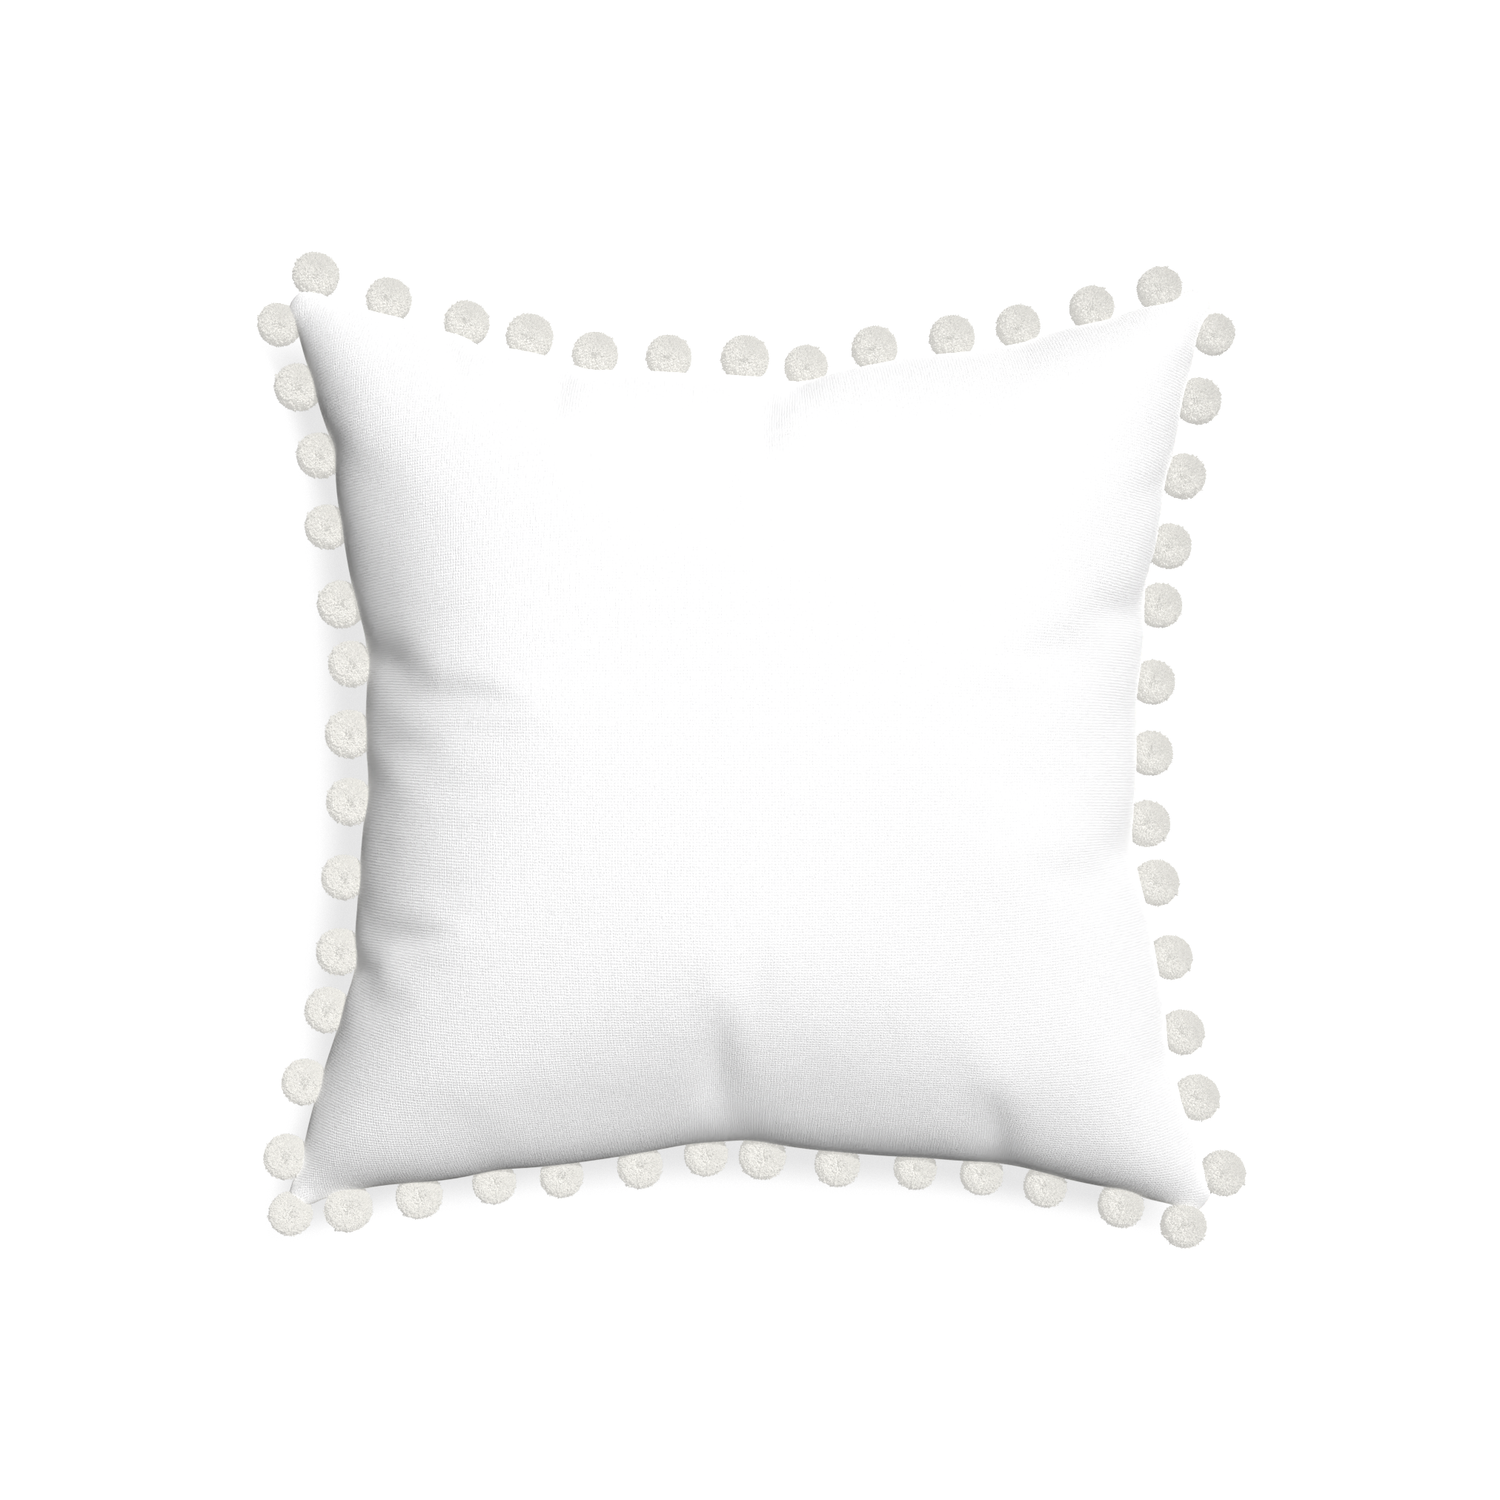 20-square snow custom pillow with snow pom pom on white background